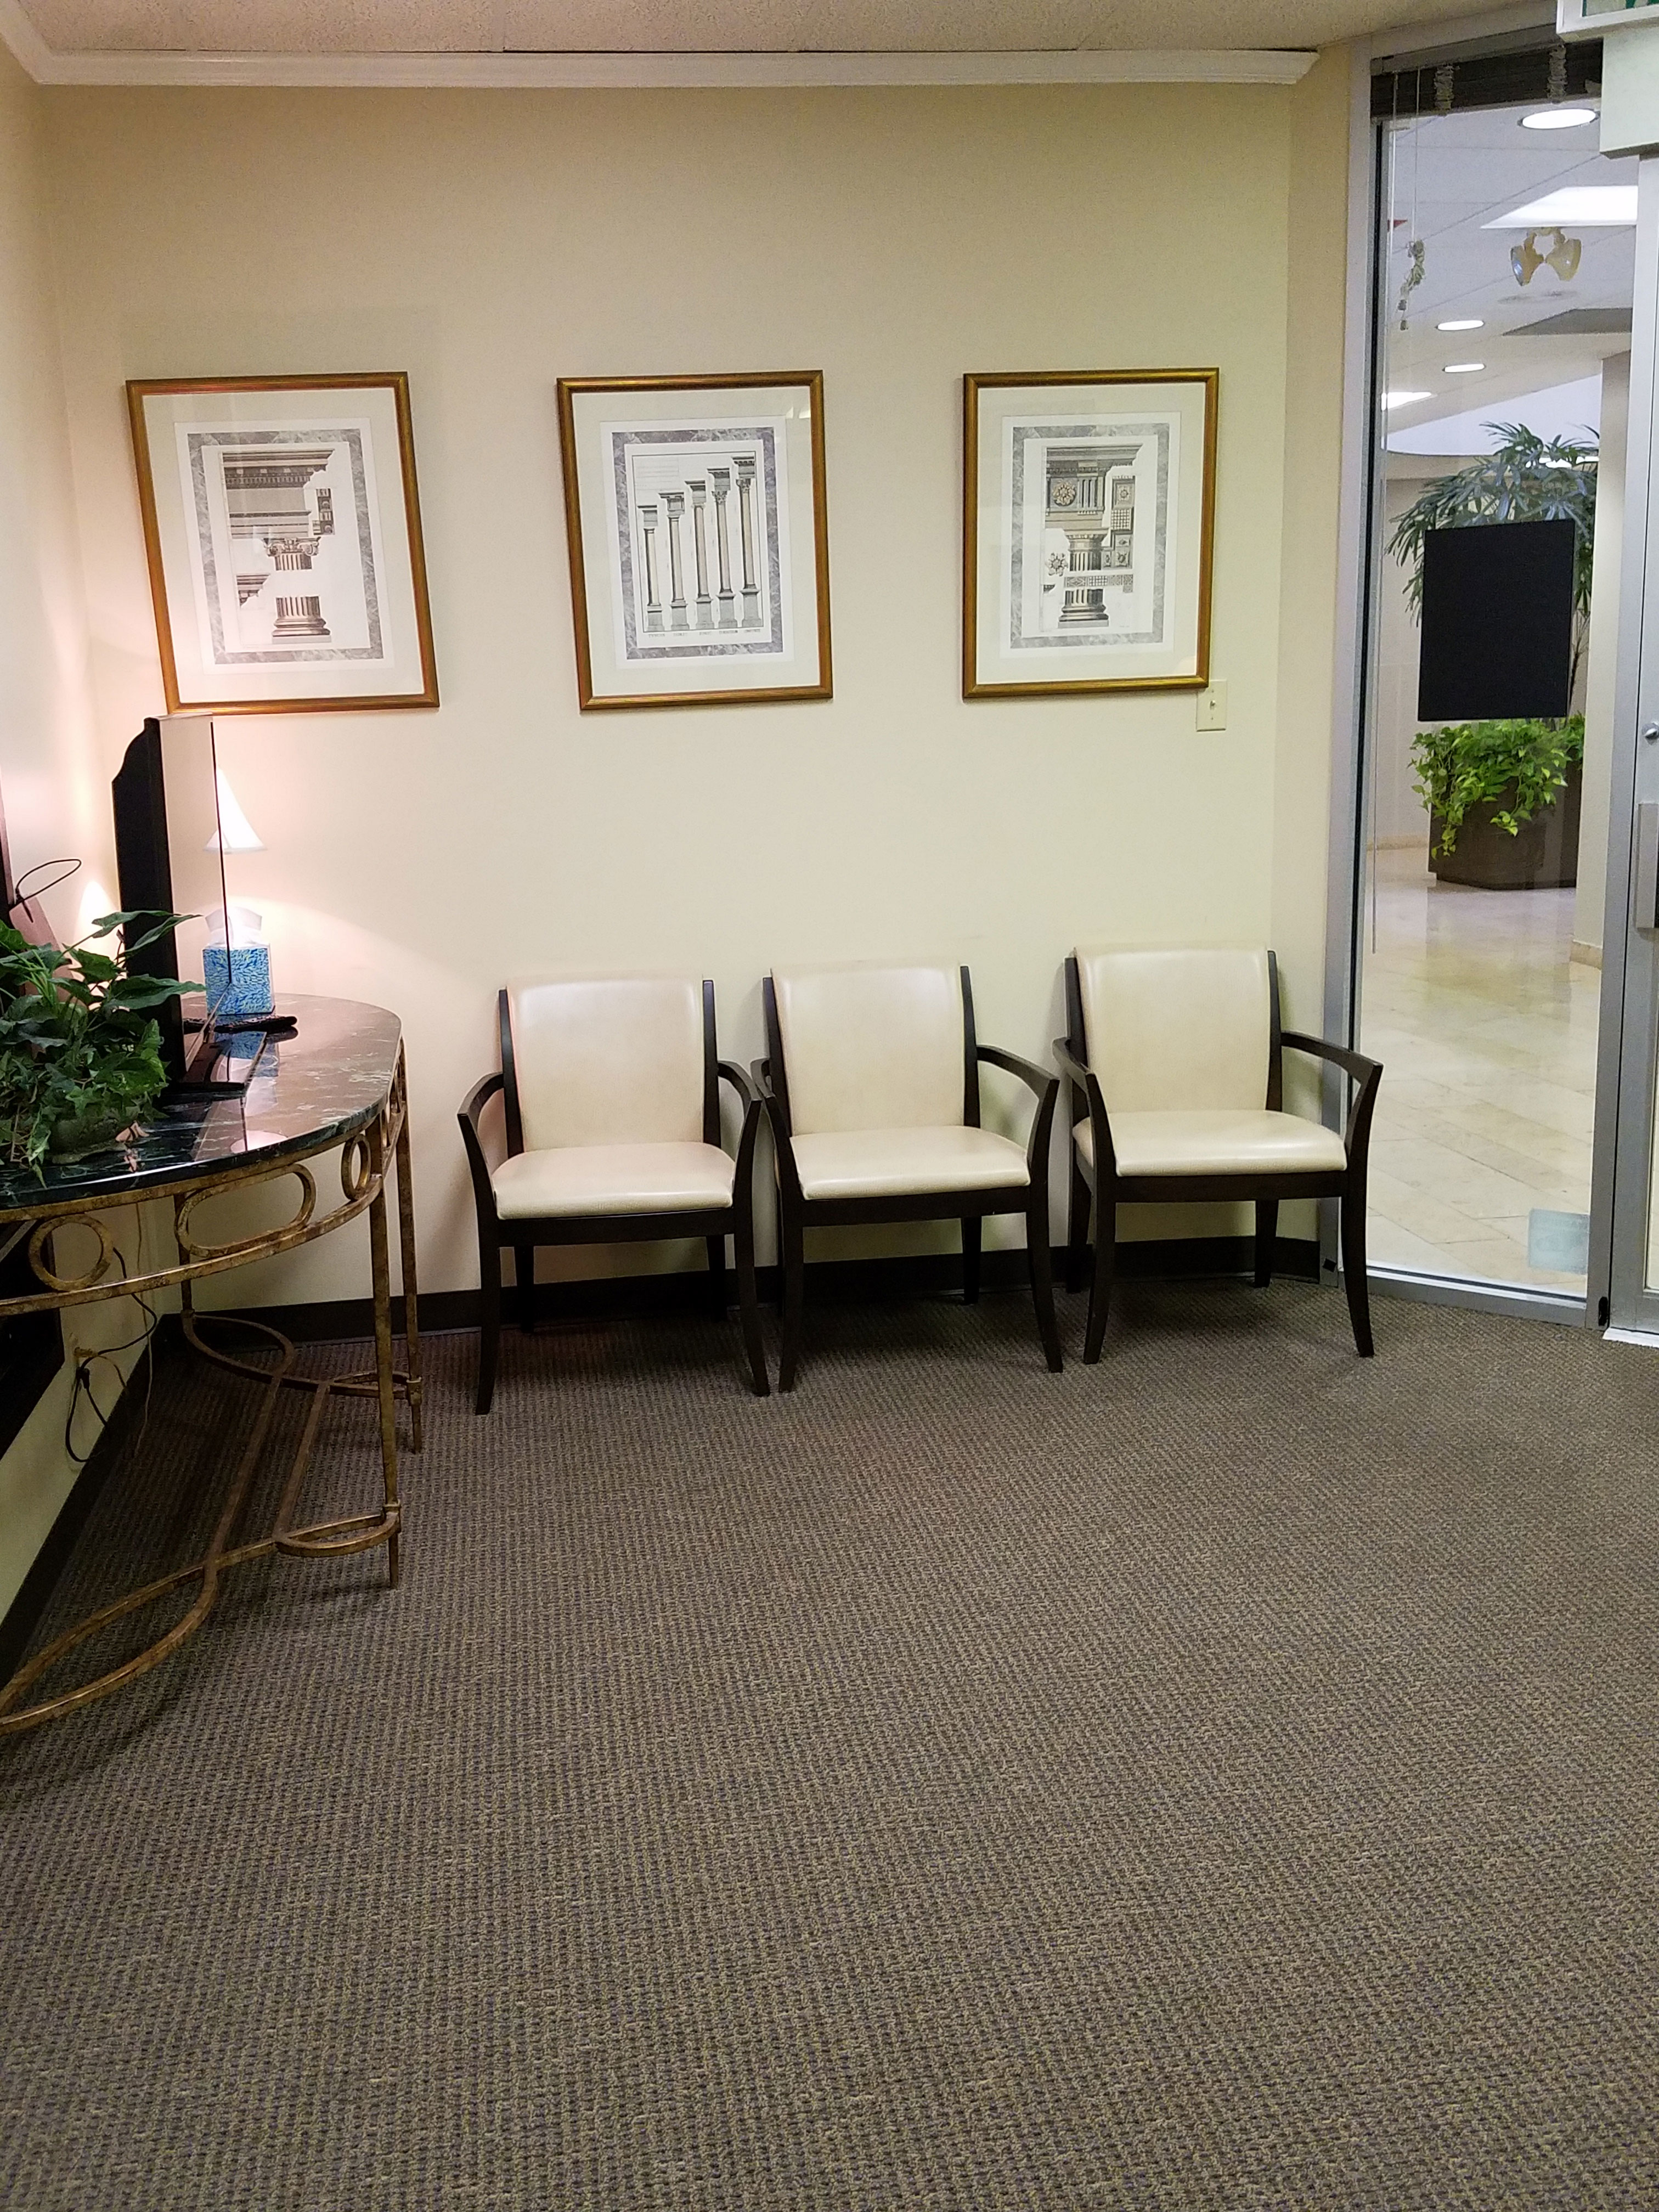 The lobby of Morris Bart's Baton Rouge office.